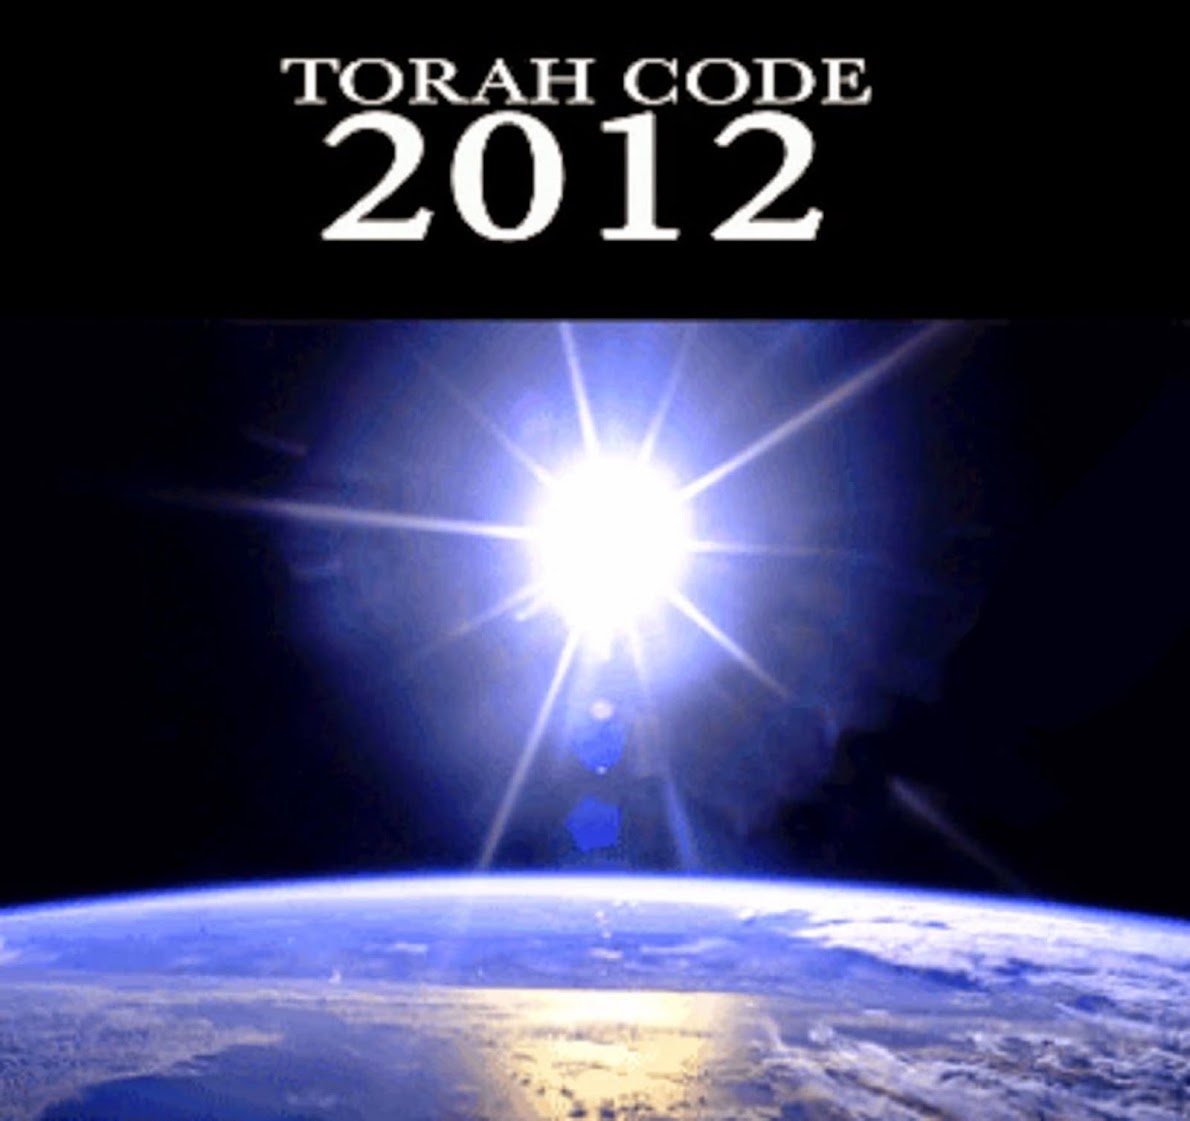 TORAH CODE 2012